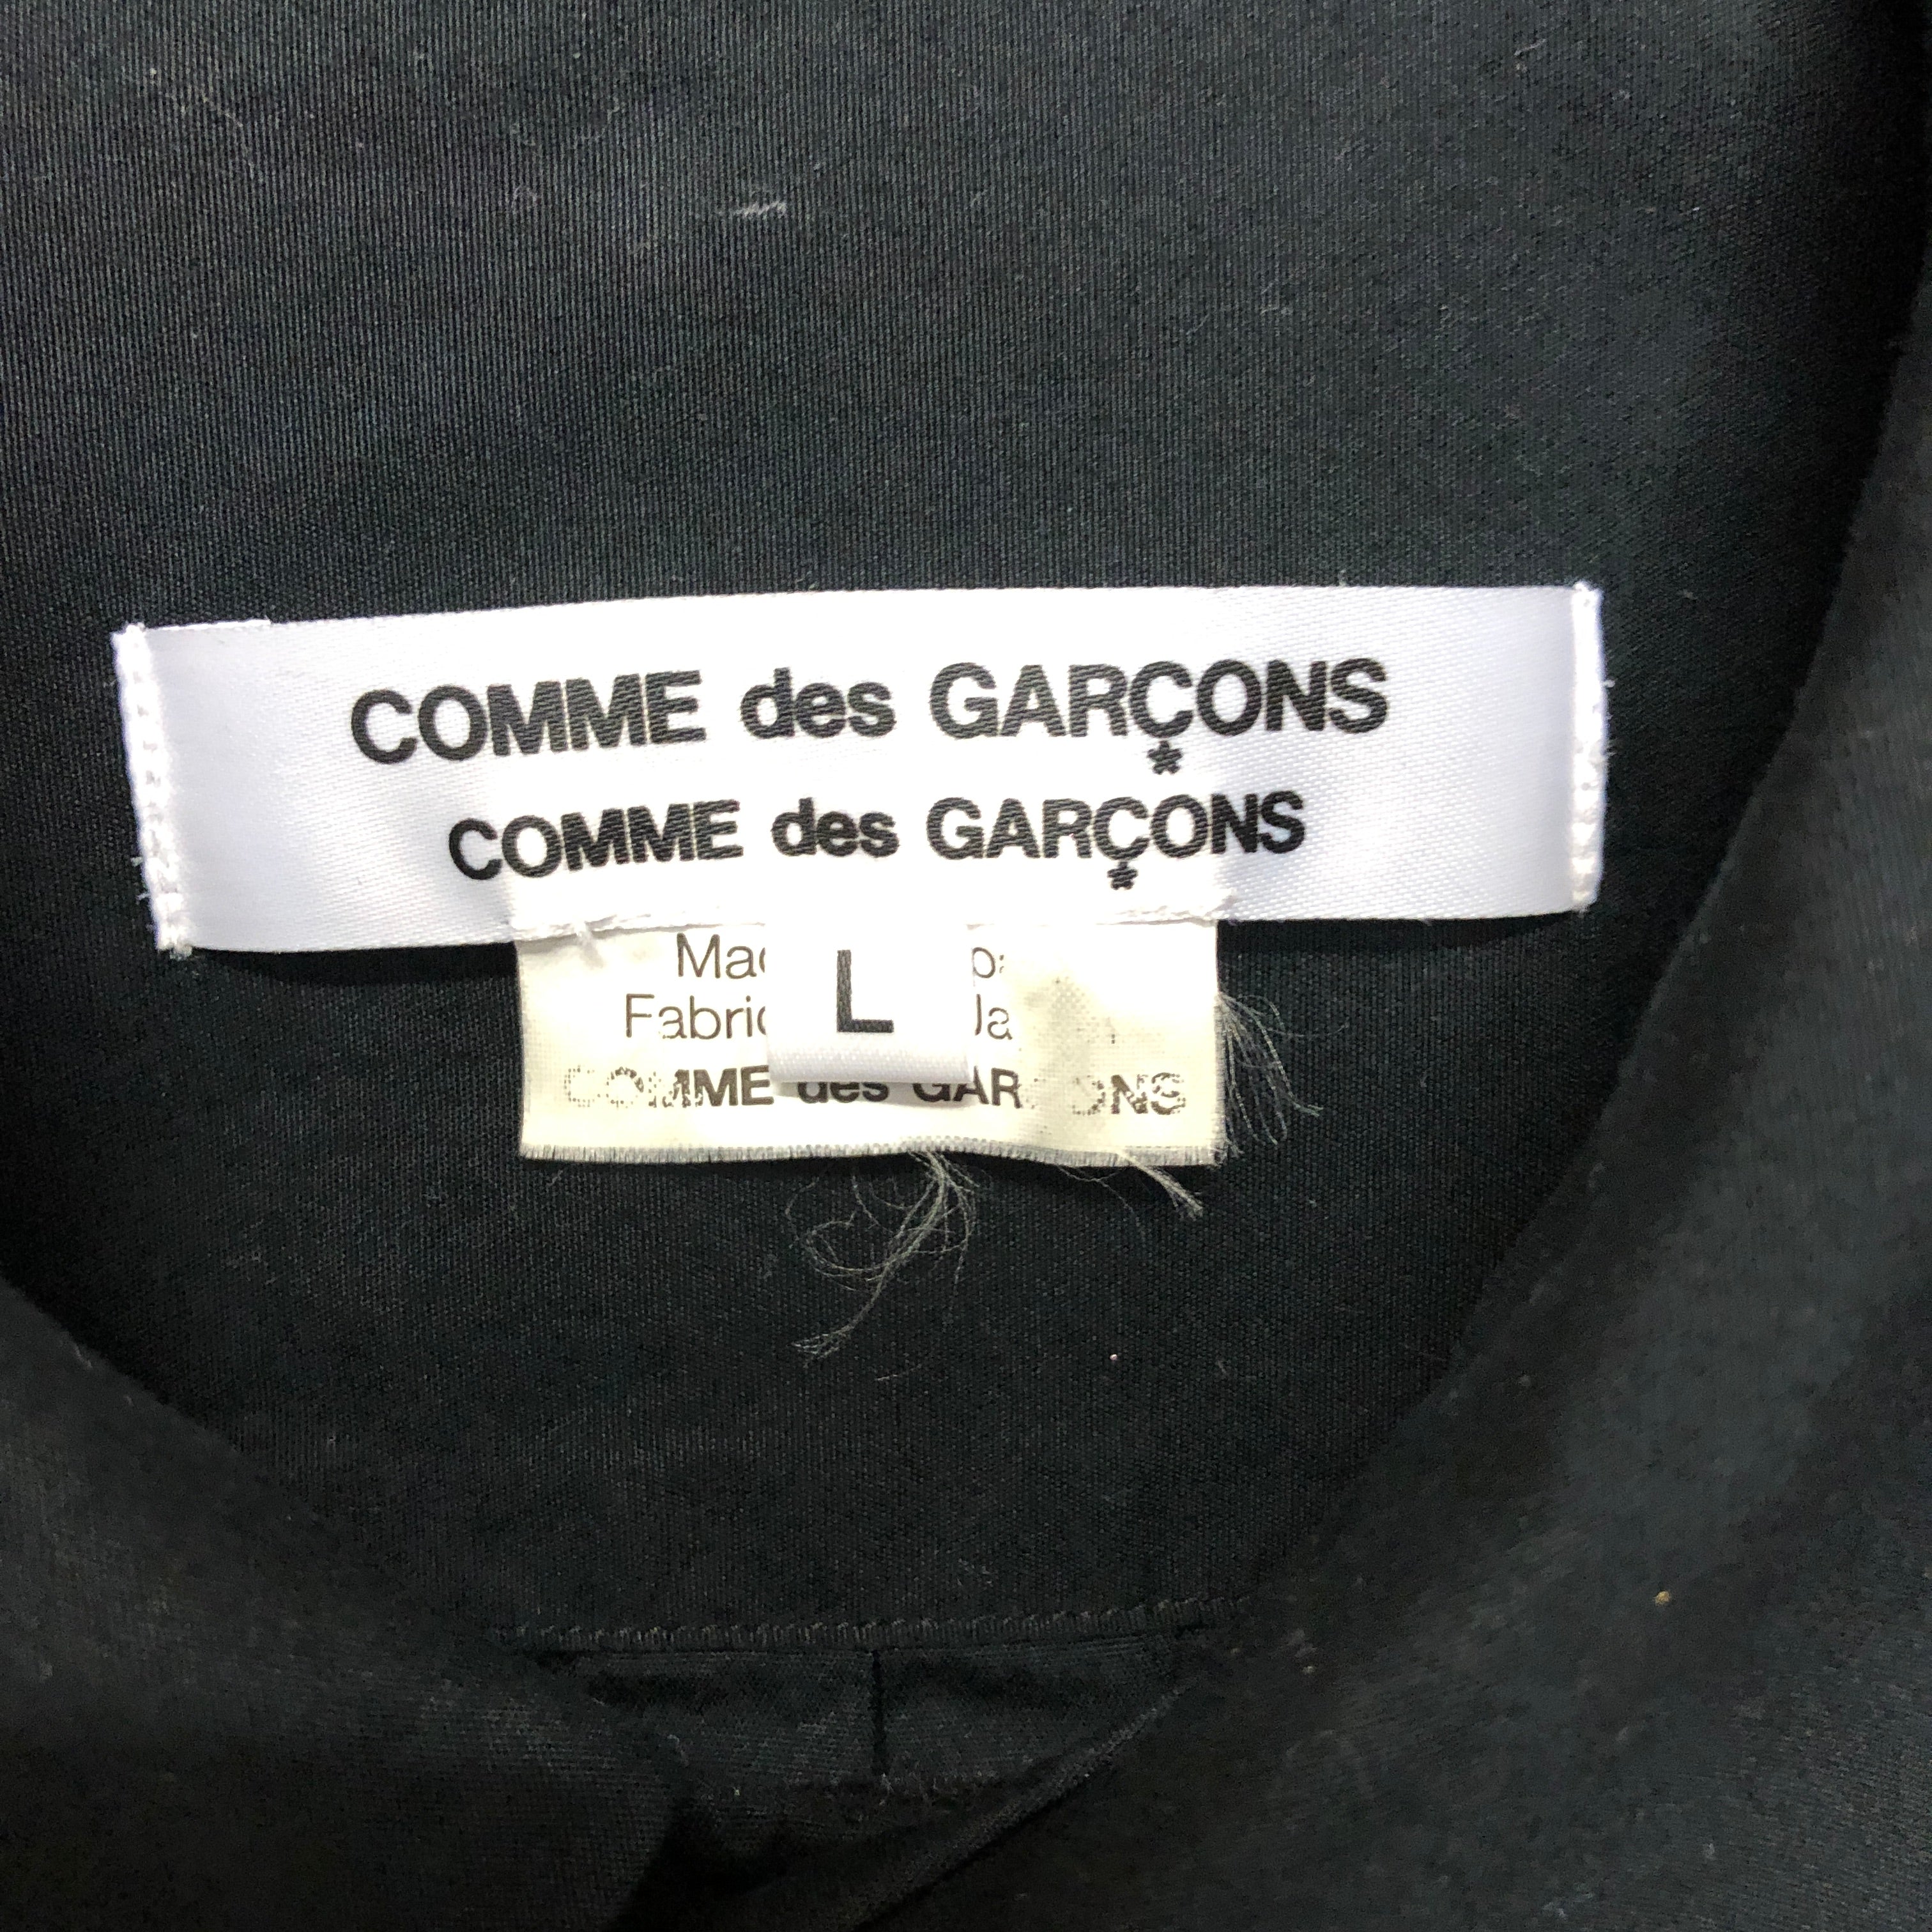 COMME DES GARCONS frilly dress shirt